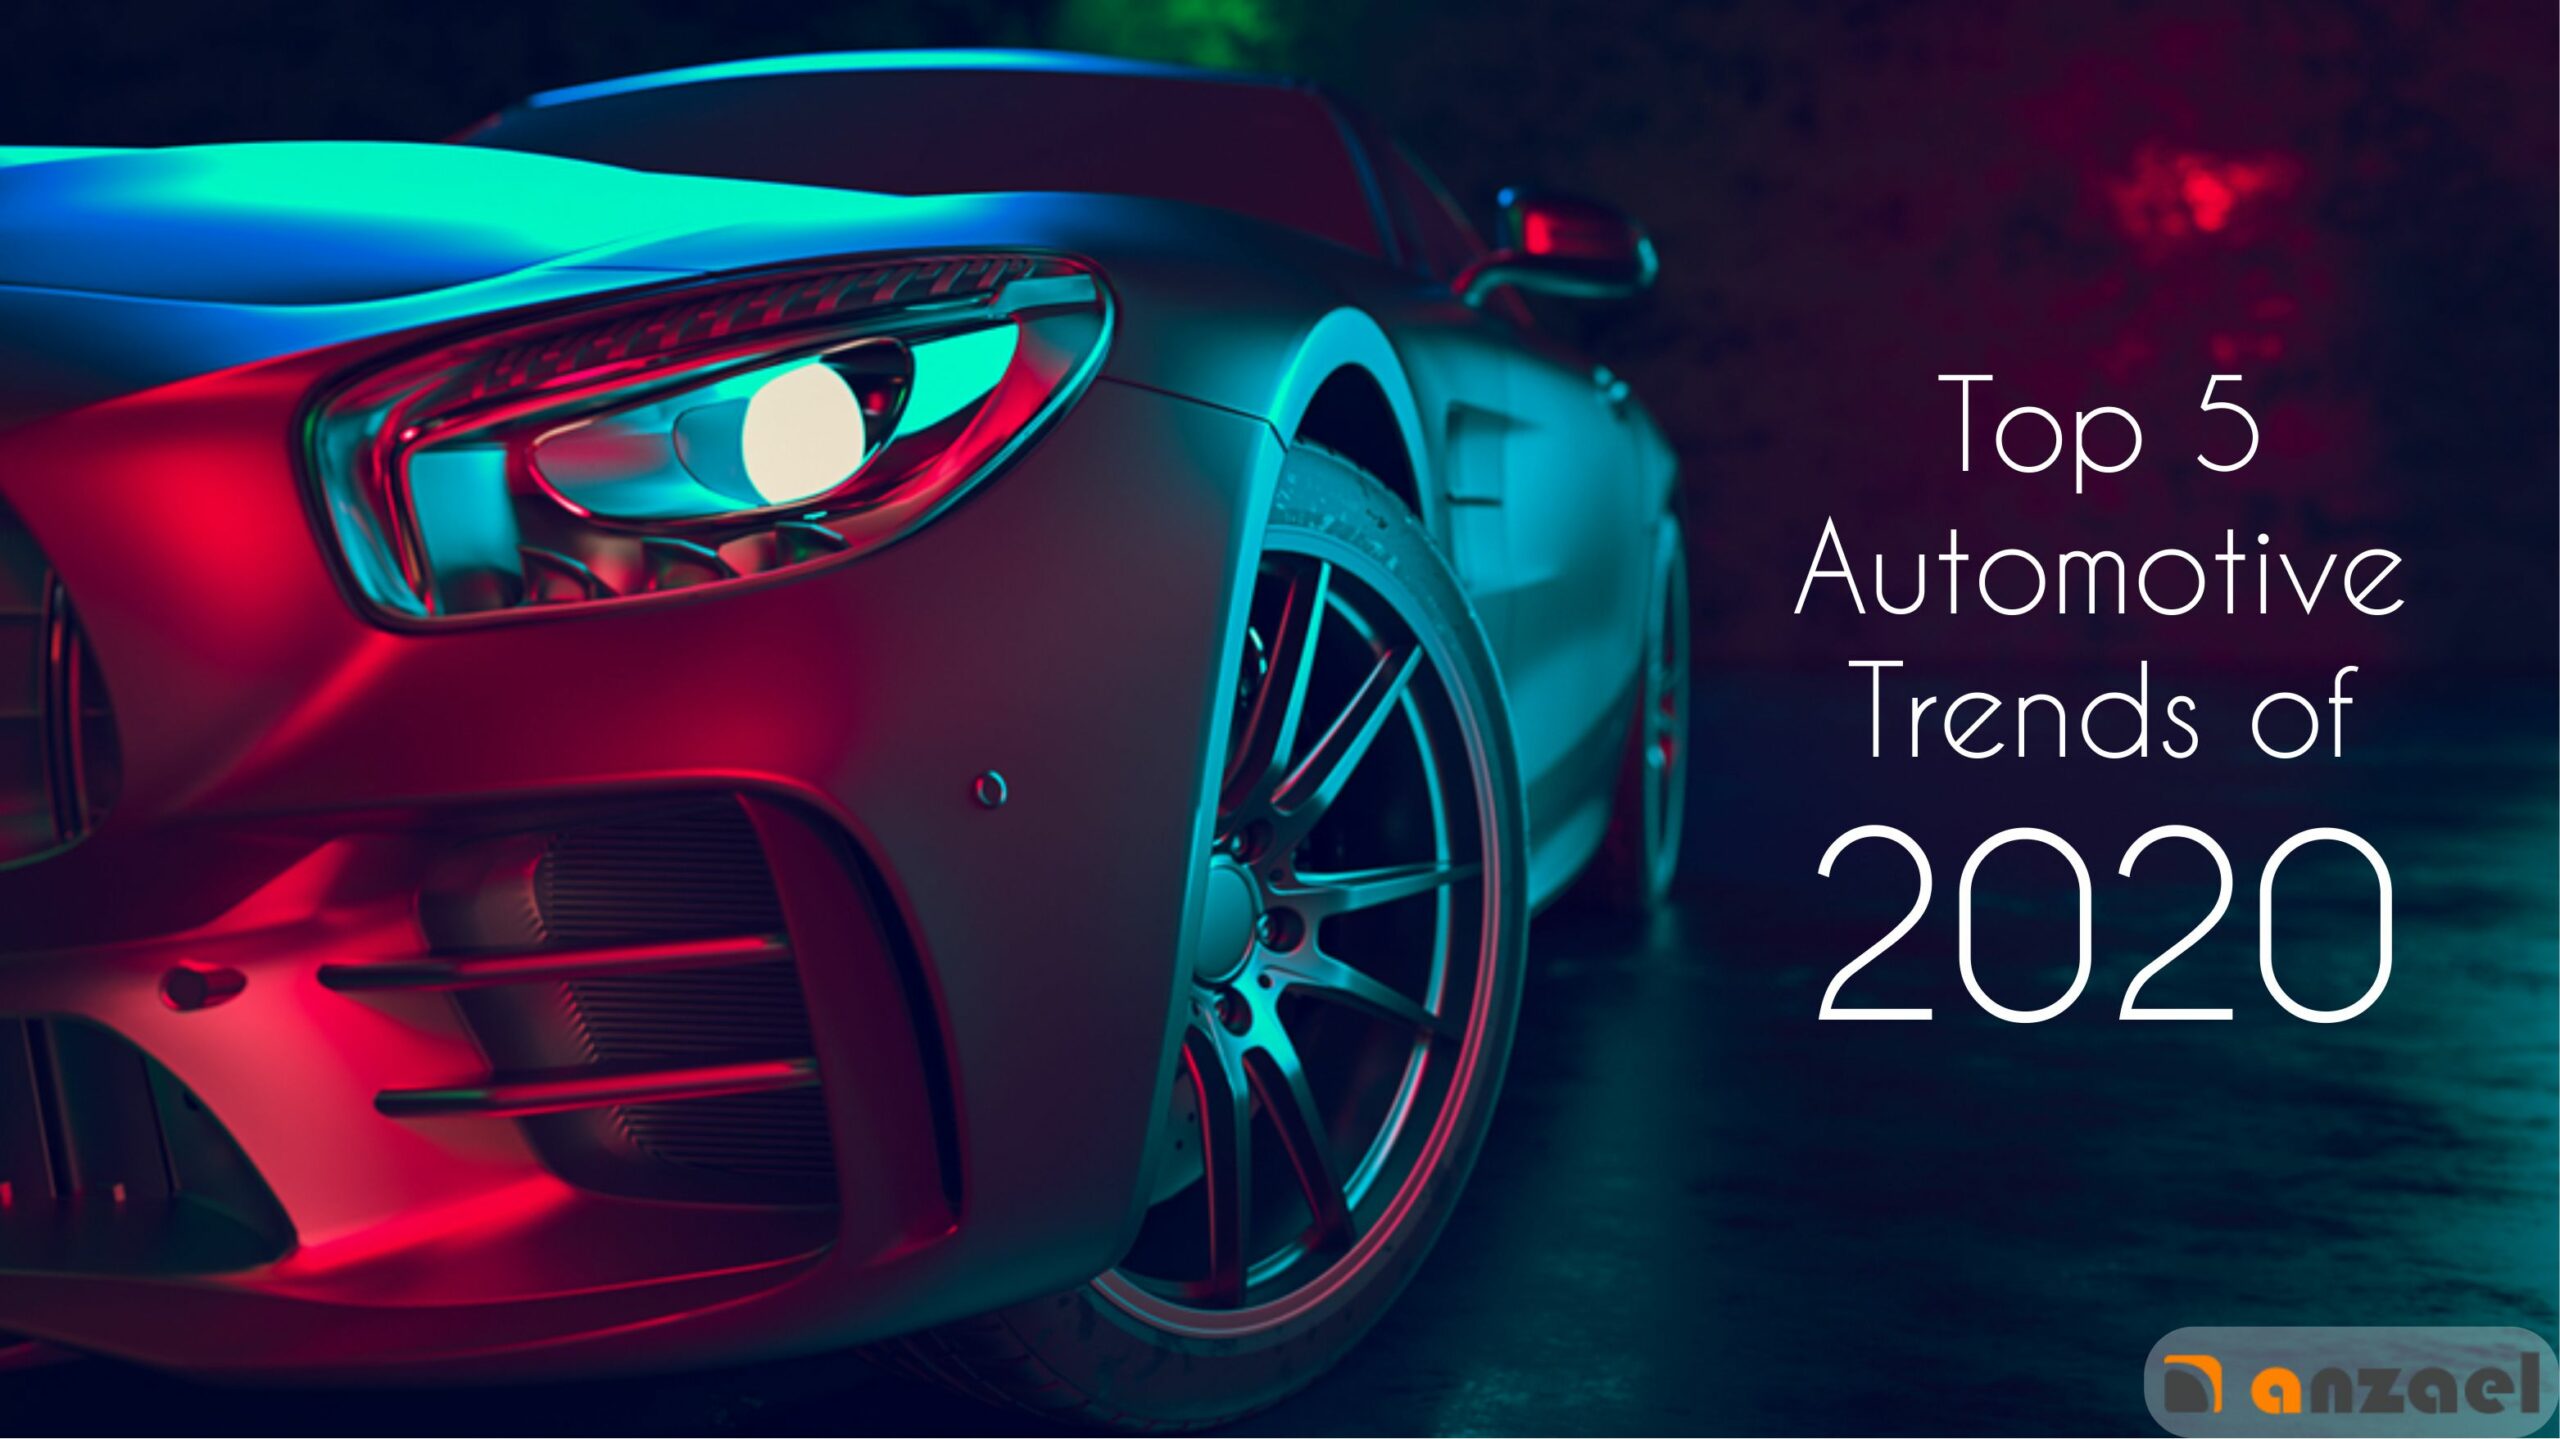 Automotive trends